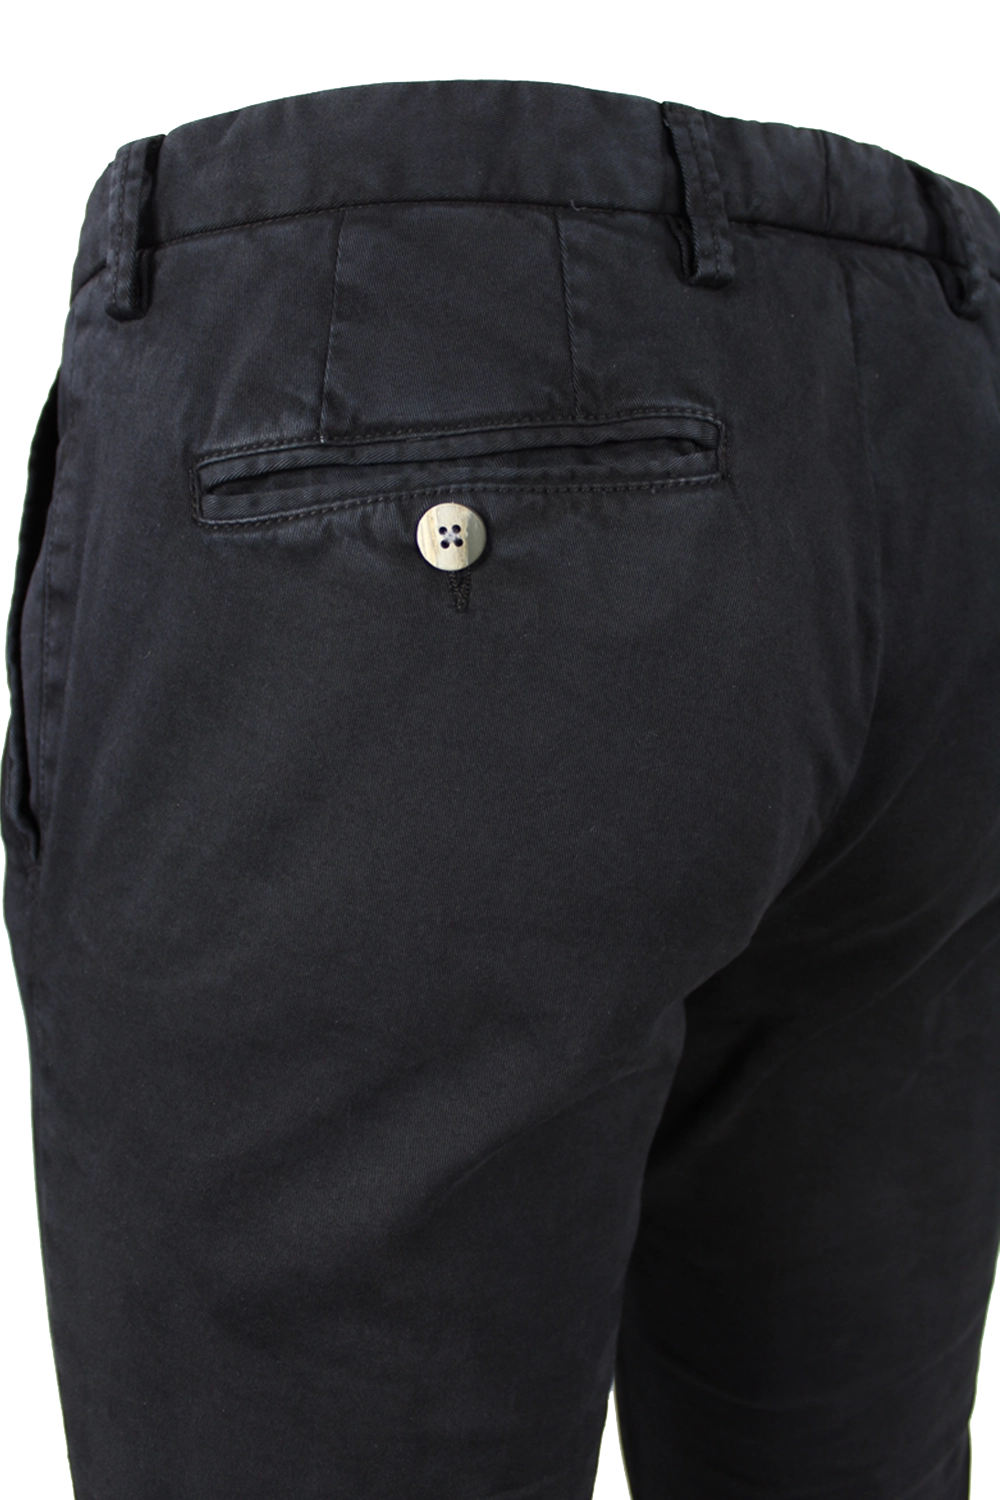 Pantalone in cotone tinto in capo nero tasca